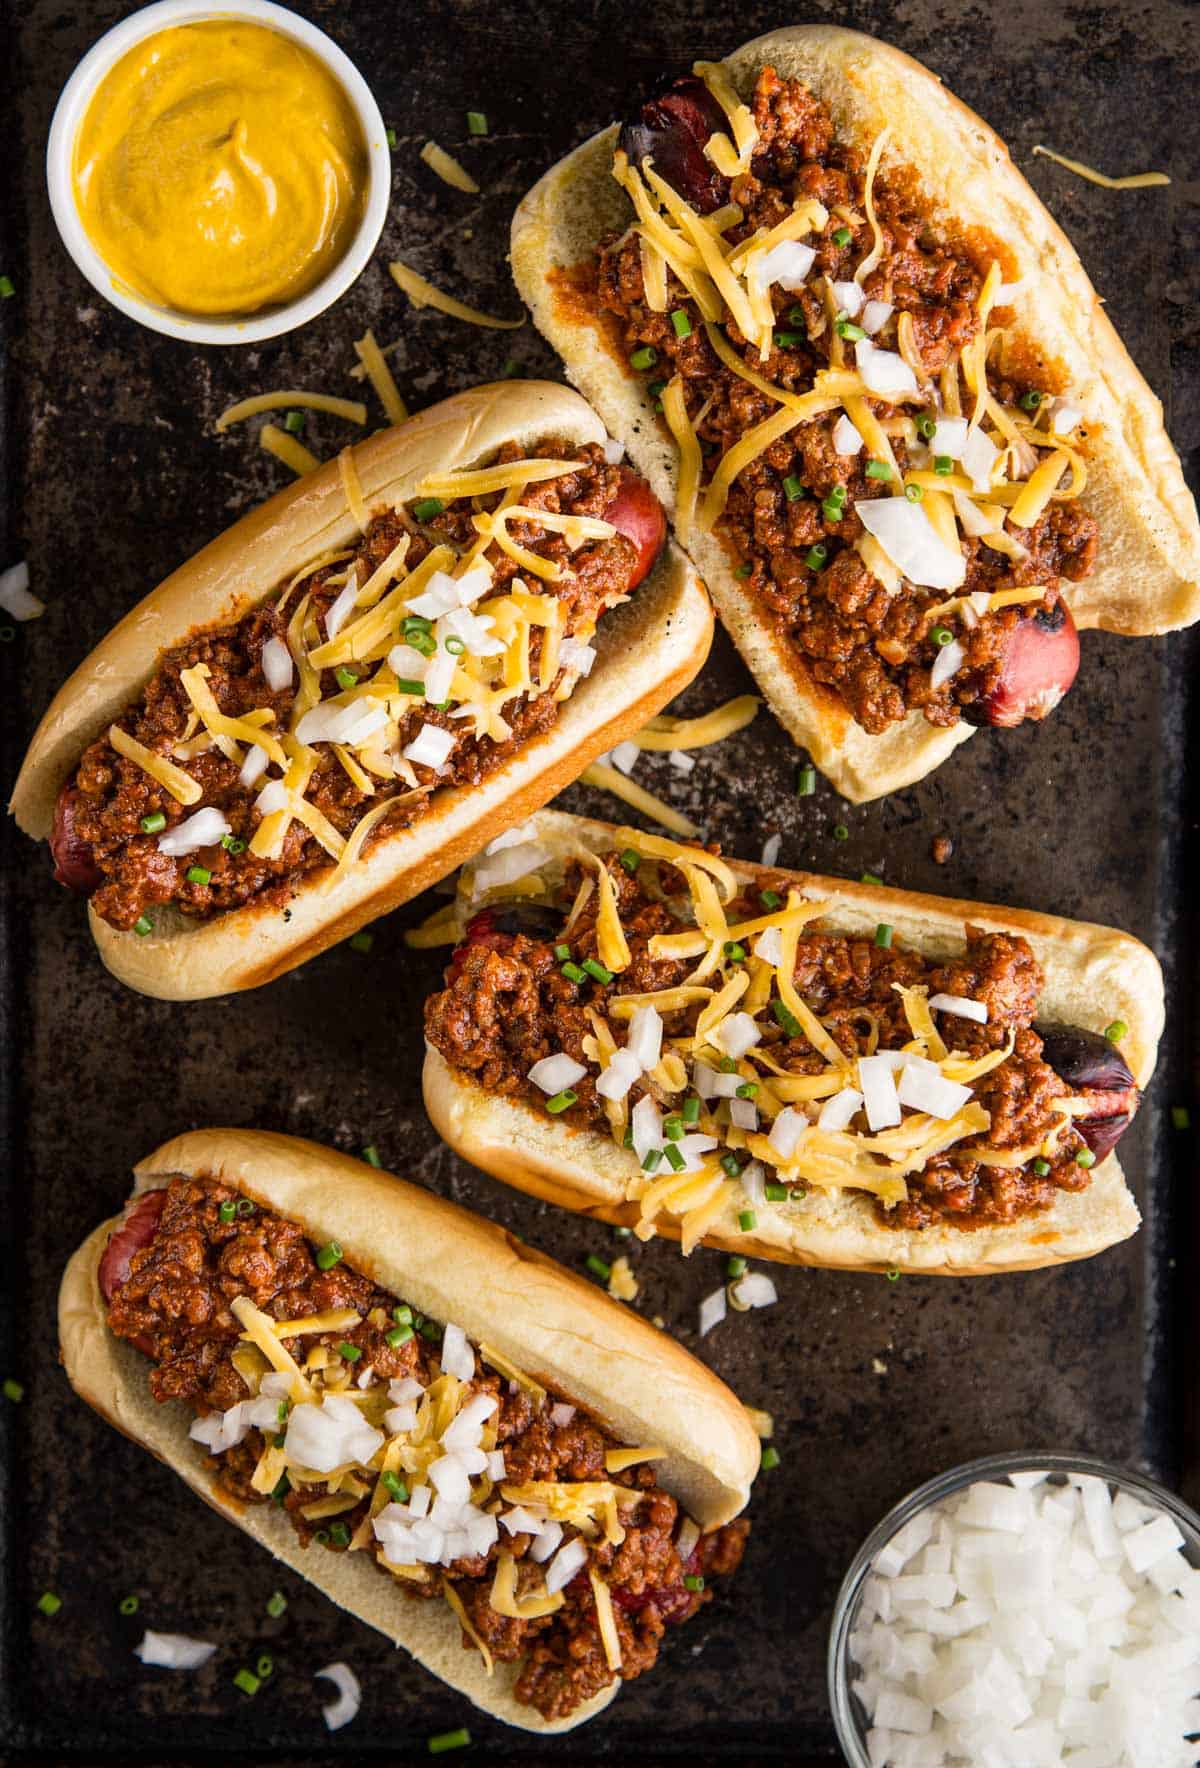 Chili Dog - With Sweet Onions and Mustard - Vindulge